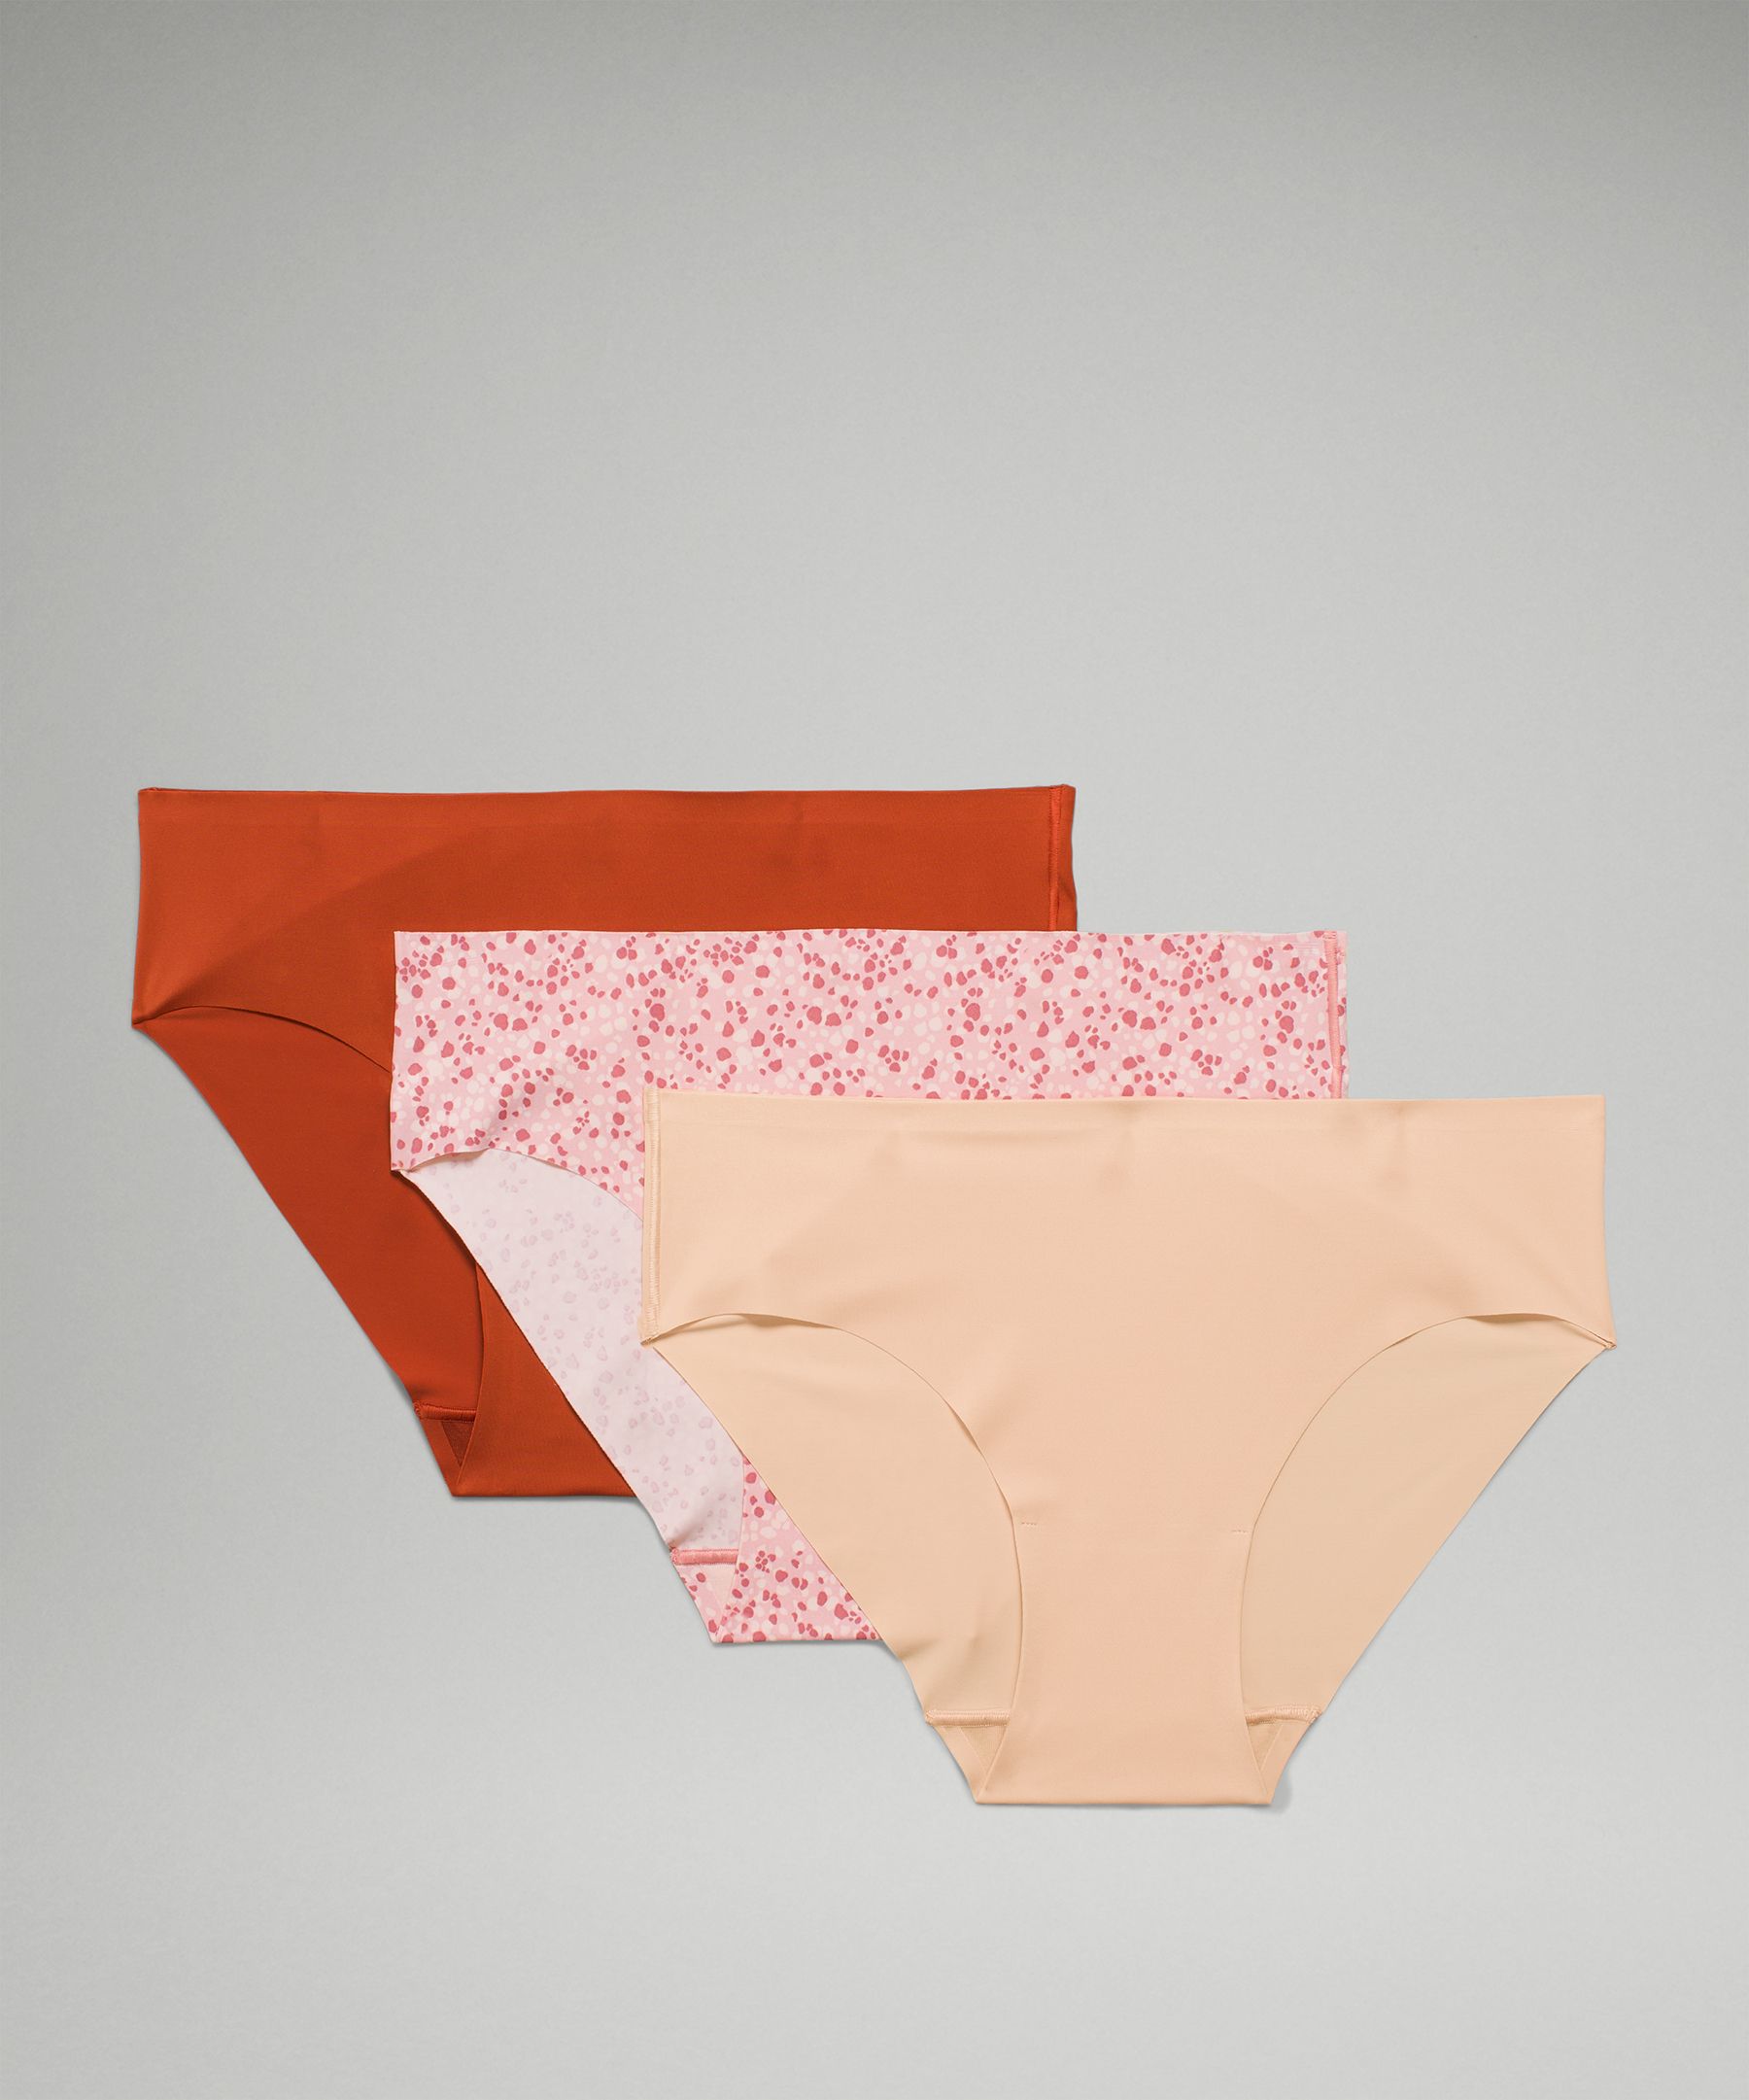 Lululemon Invisiwear Mid-rise Bikini Underwear 3 Pack In Aztec Brick/bleached Apricot/scatter Petal Pink Rosebud Pink Mist Brier Rose